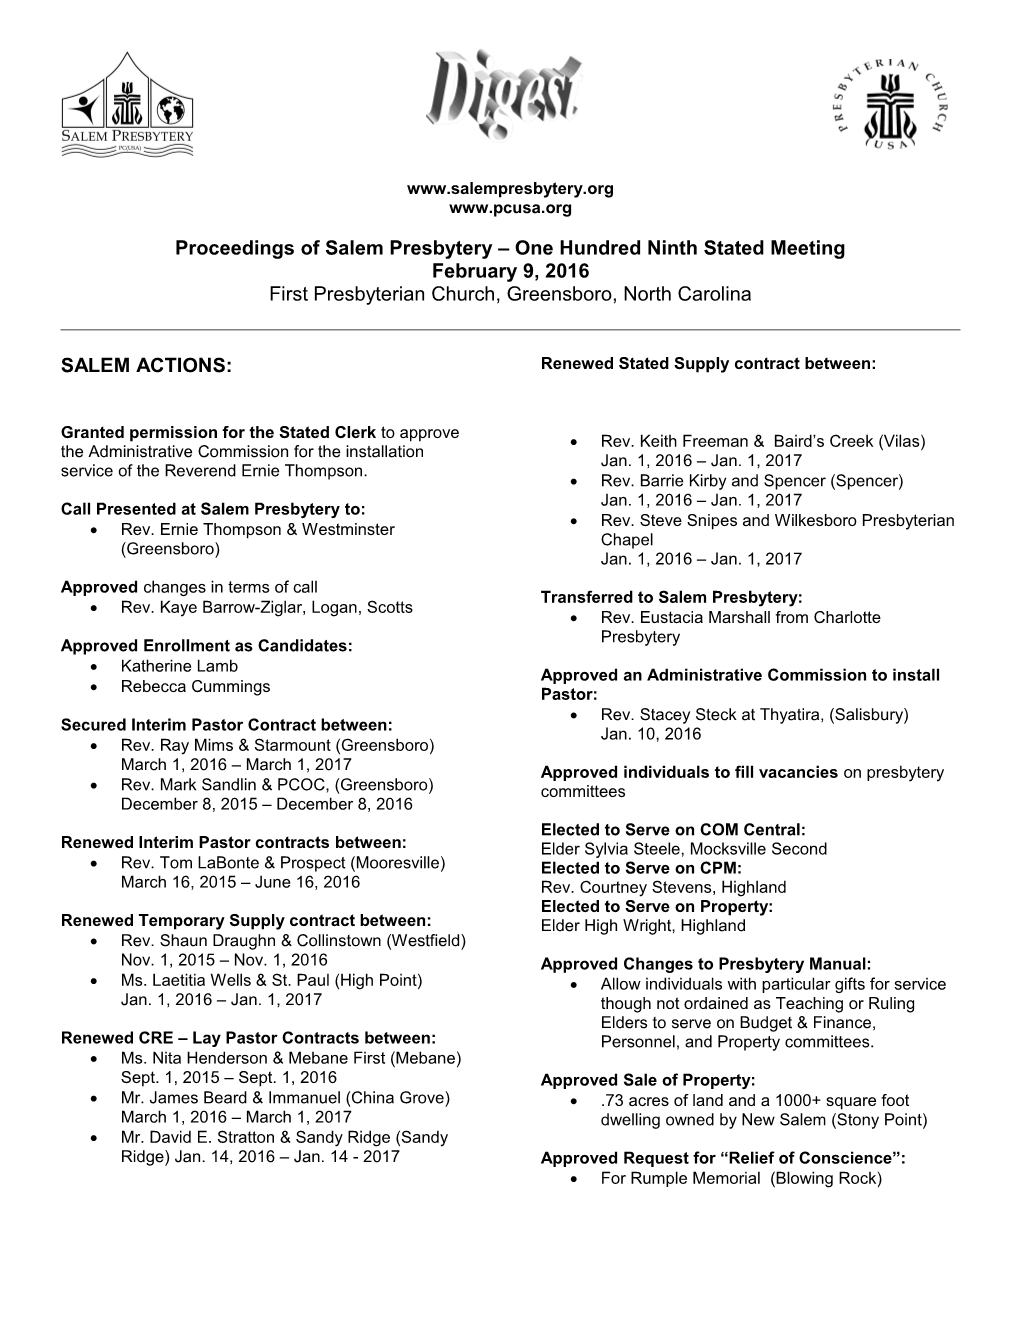 Proceedings of Salem Presbytery One Hundred Ninth Stated Meeting